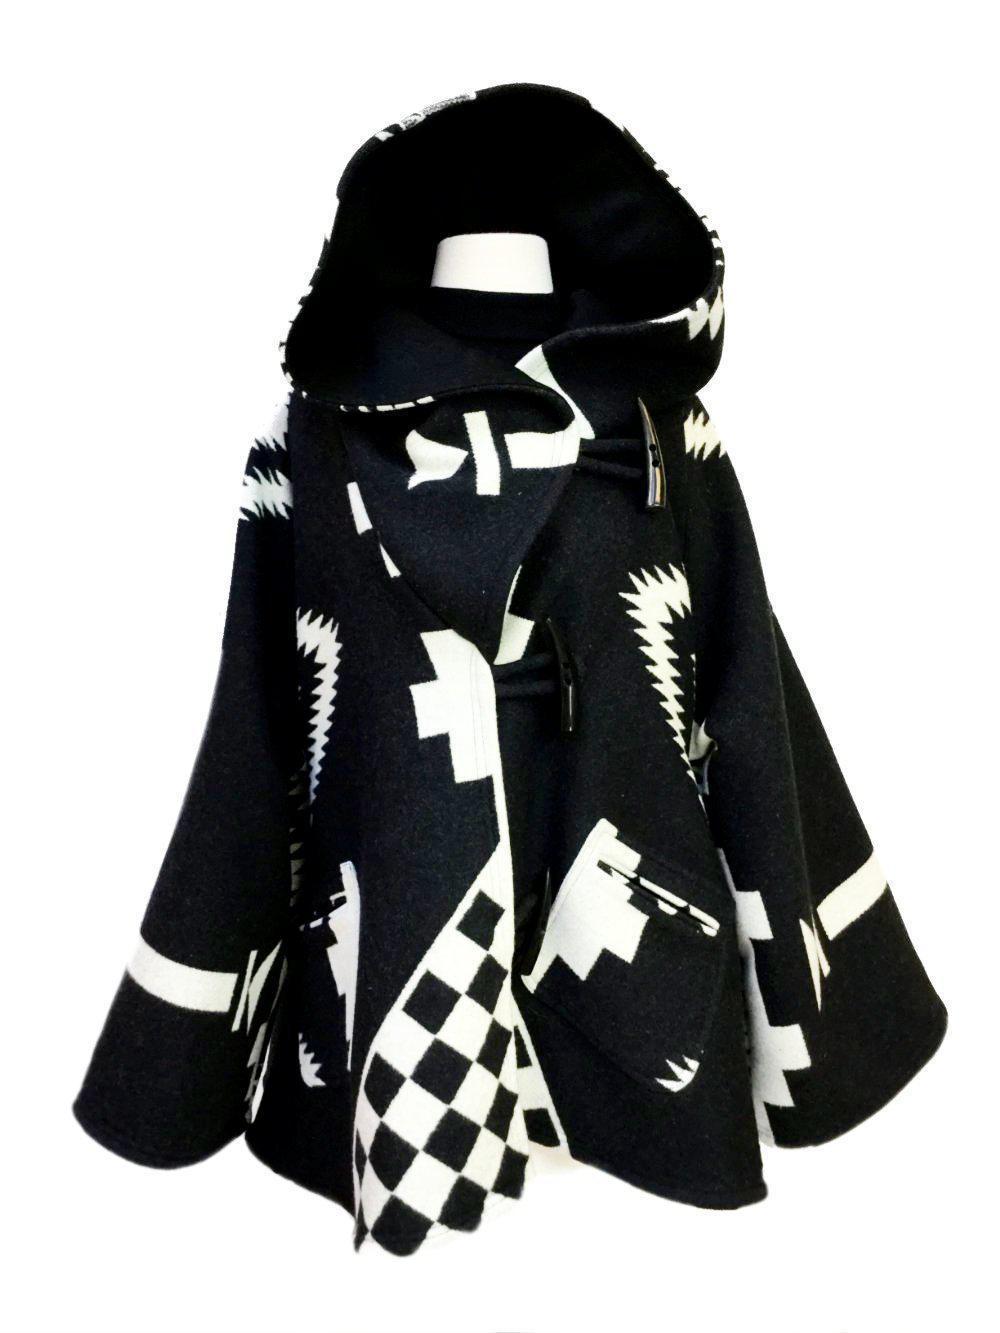 LINDSEY THORNBURG PENDLETON Black White Wool Hooded Cape Coat Toggle Closure-designer resale